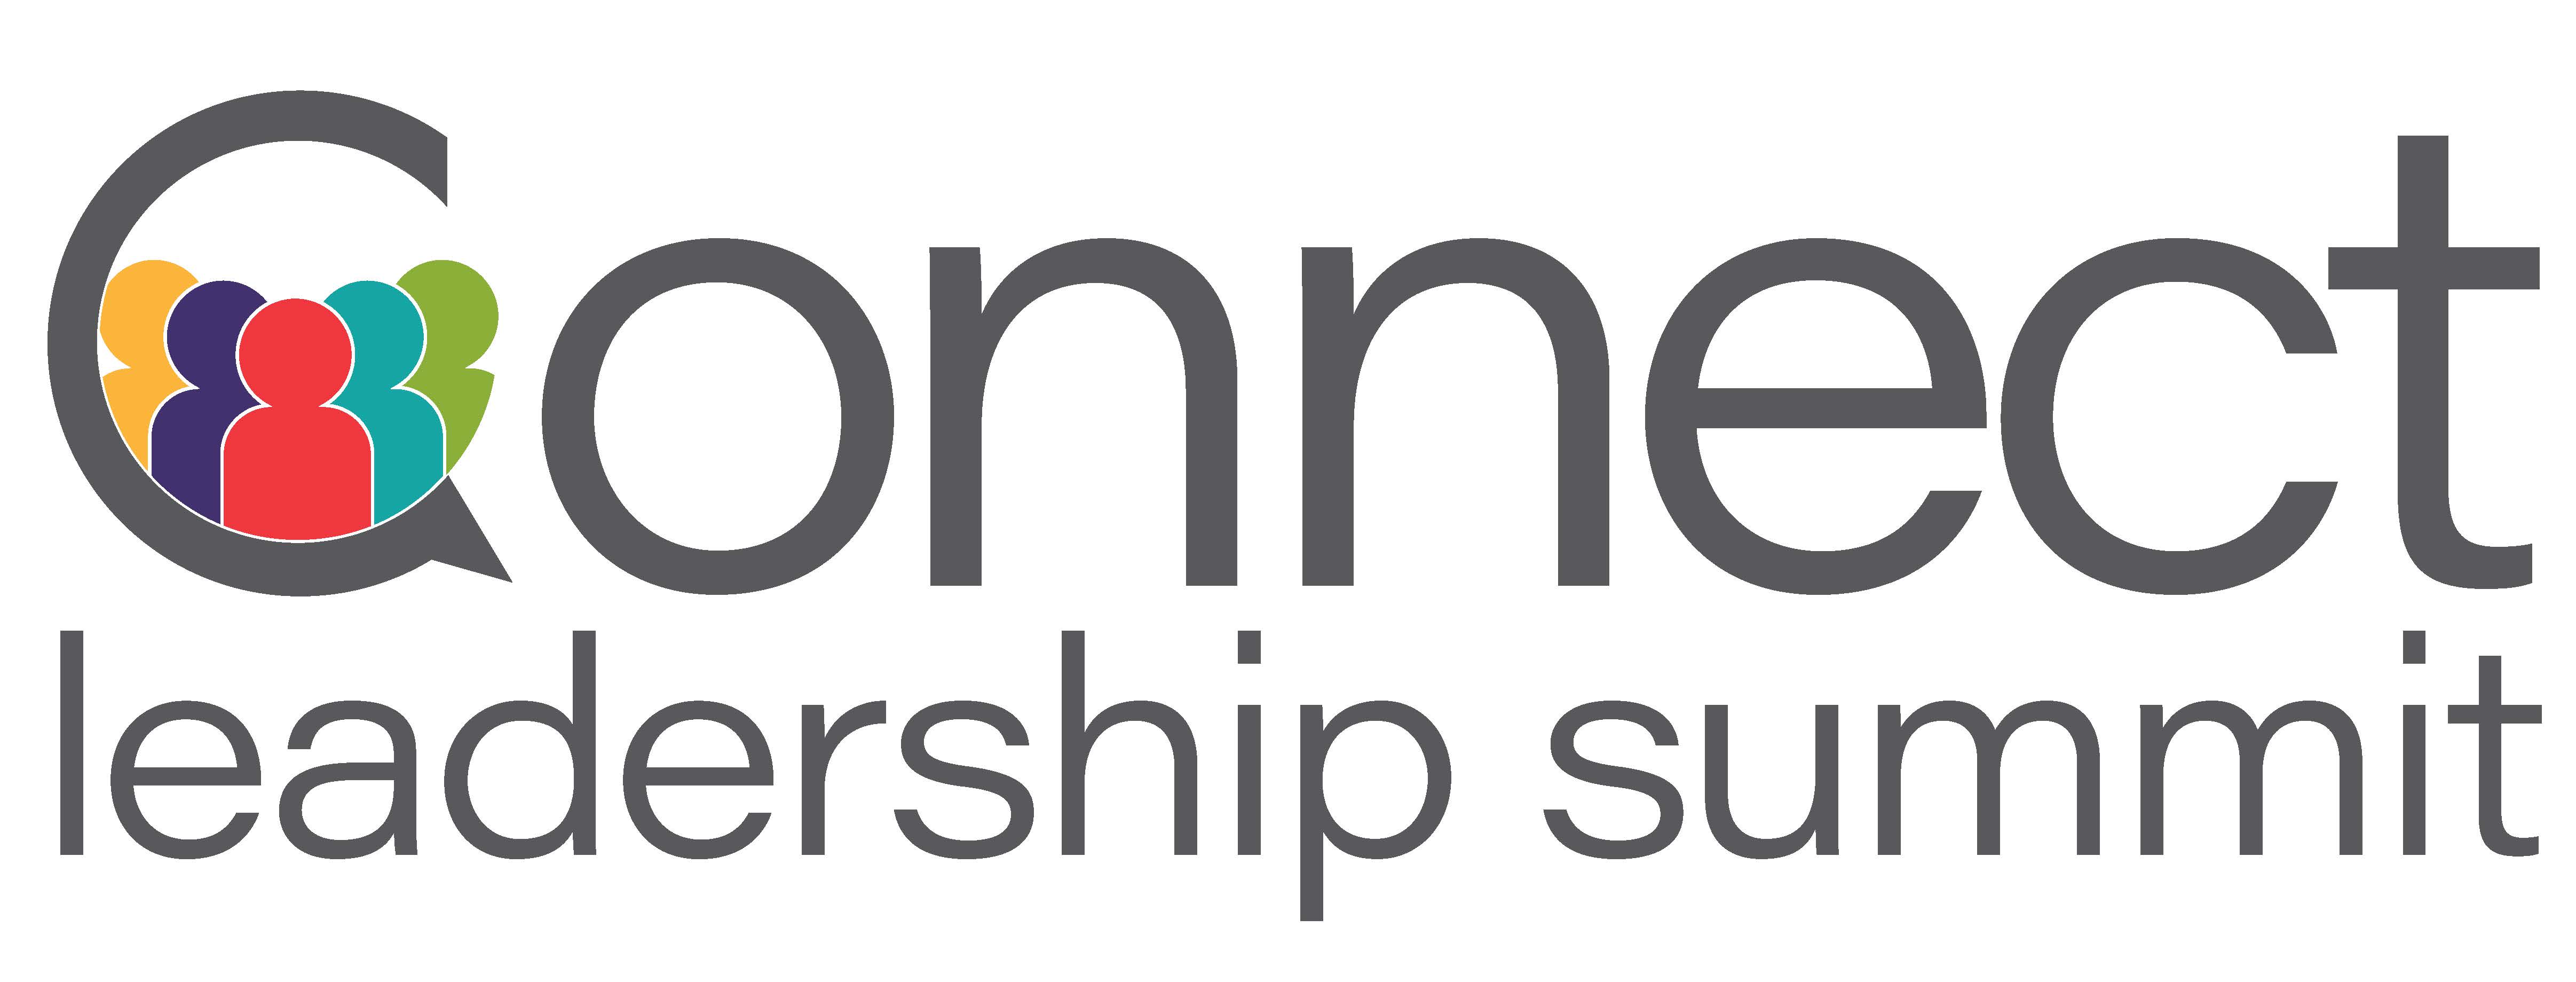 Members Responsive Portal Connect Leadership Summit